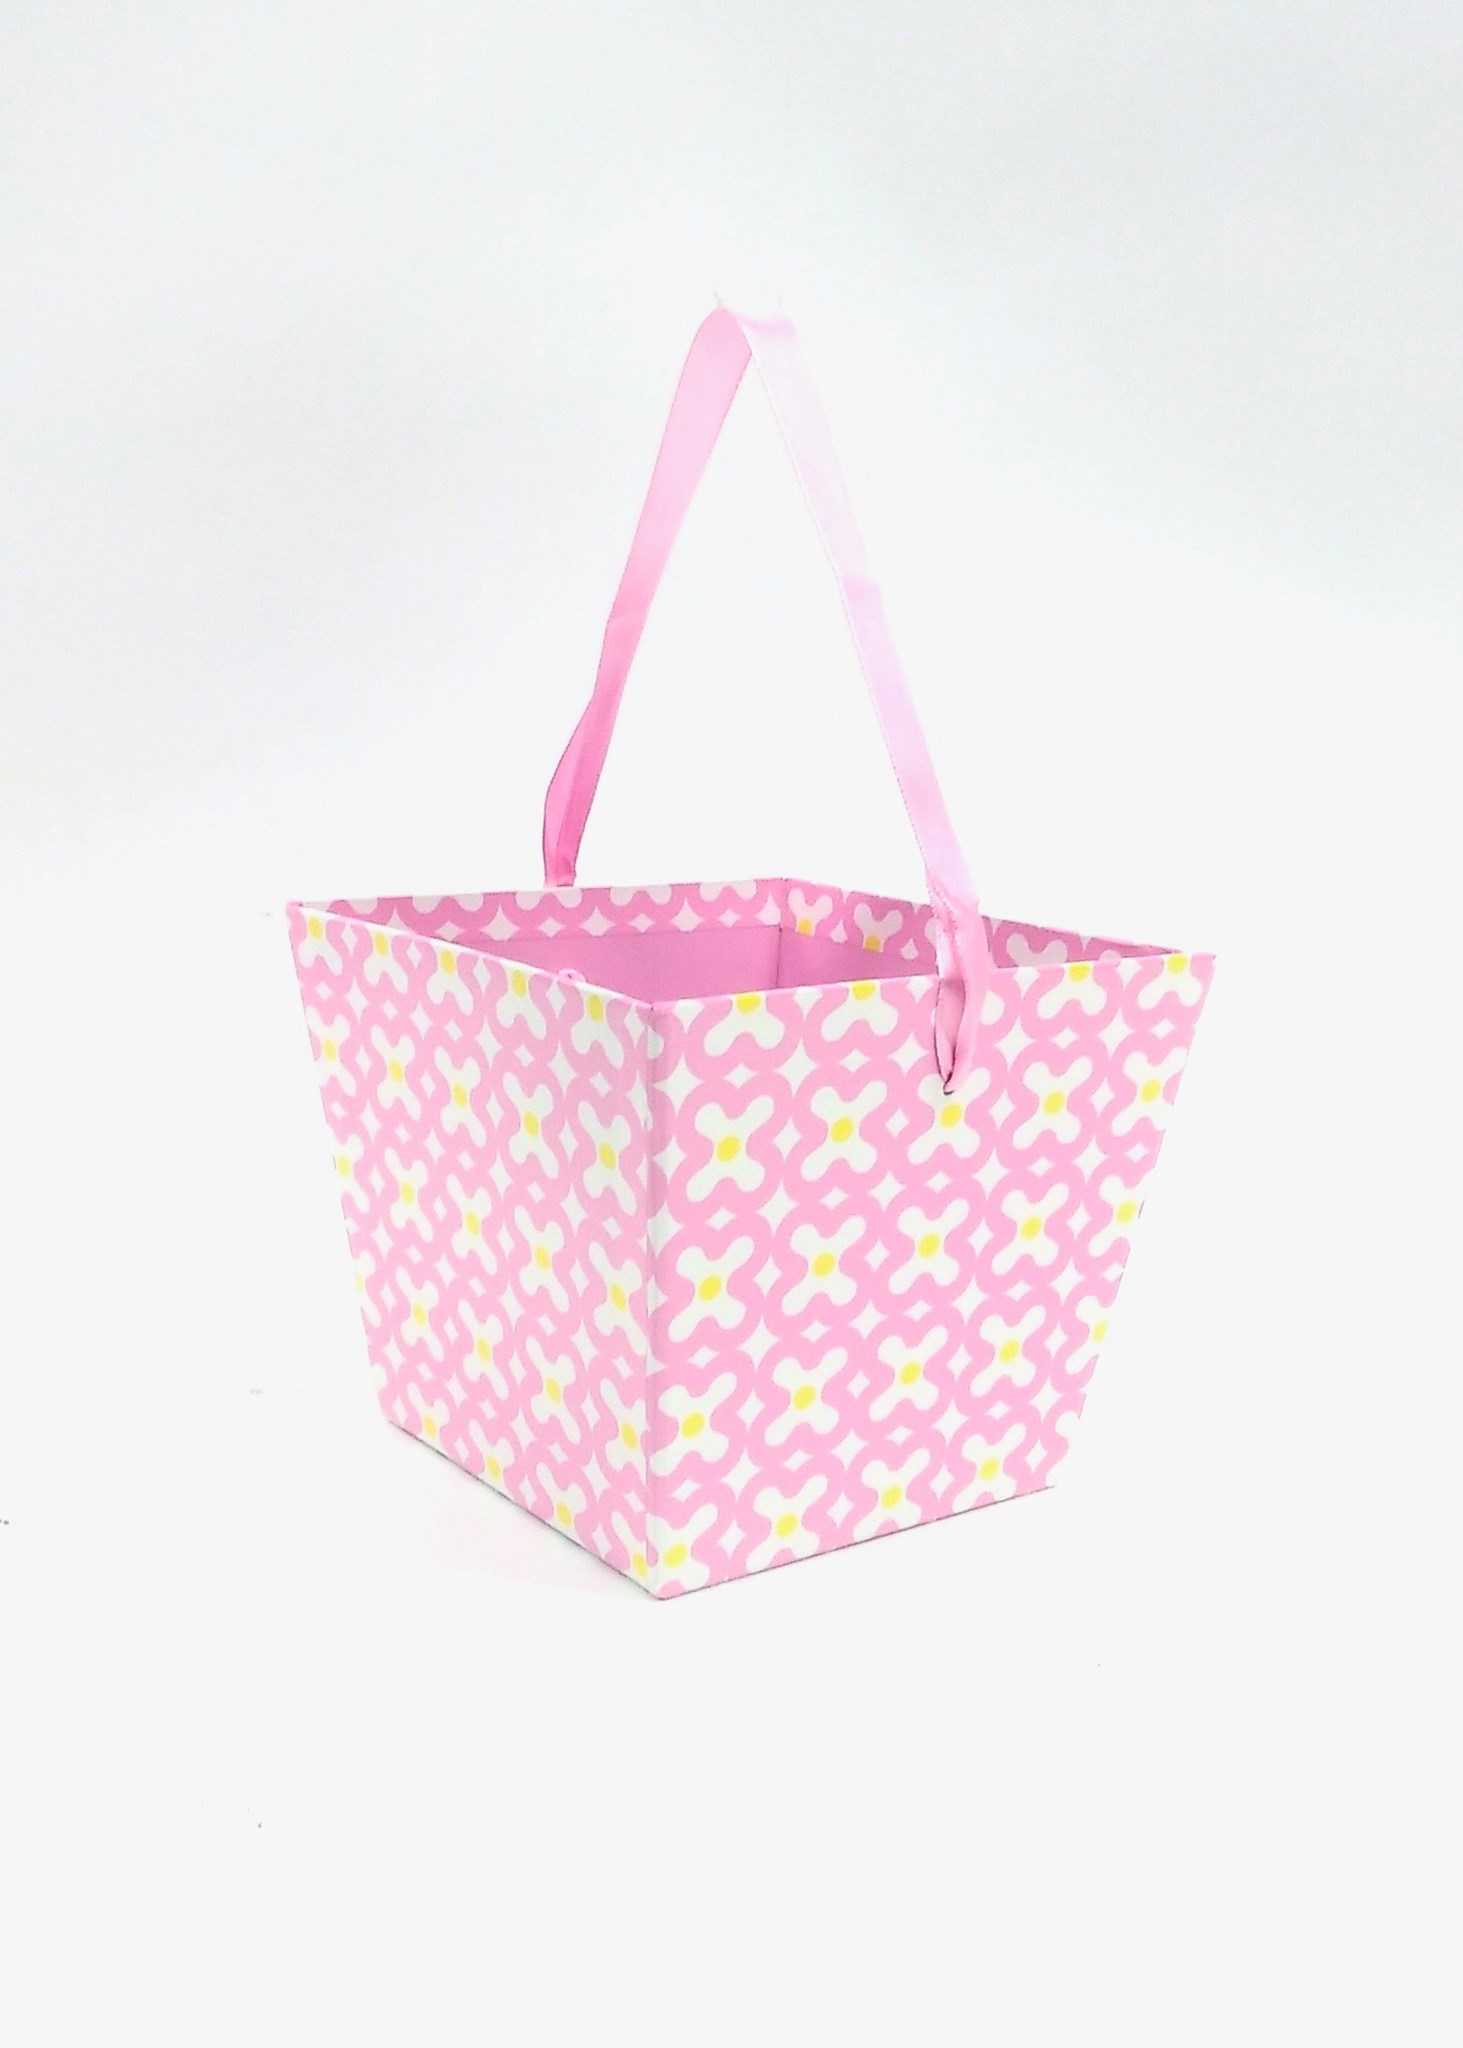 Gift Basket Pink Flower [ITG10033] 0.83 Toys